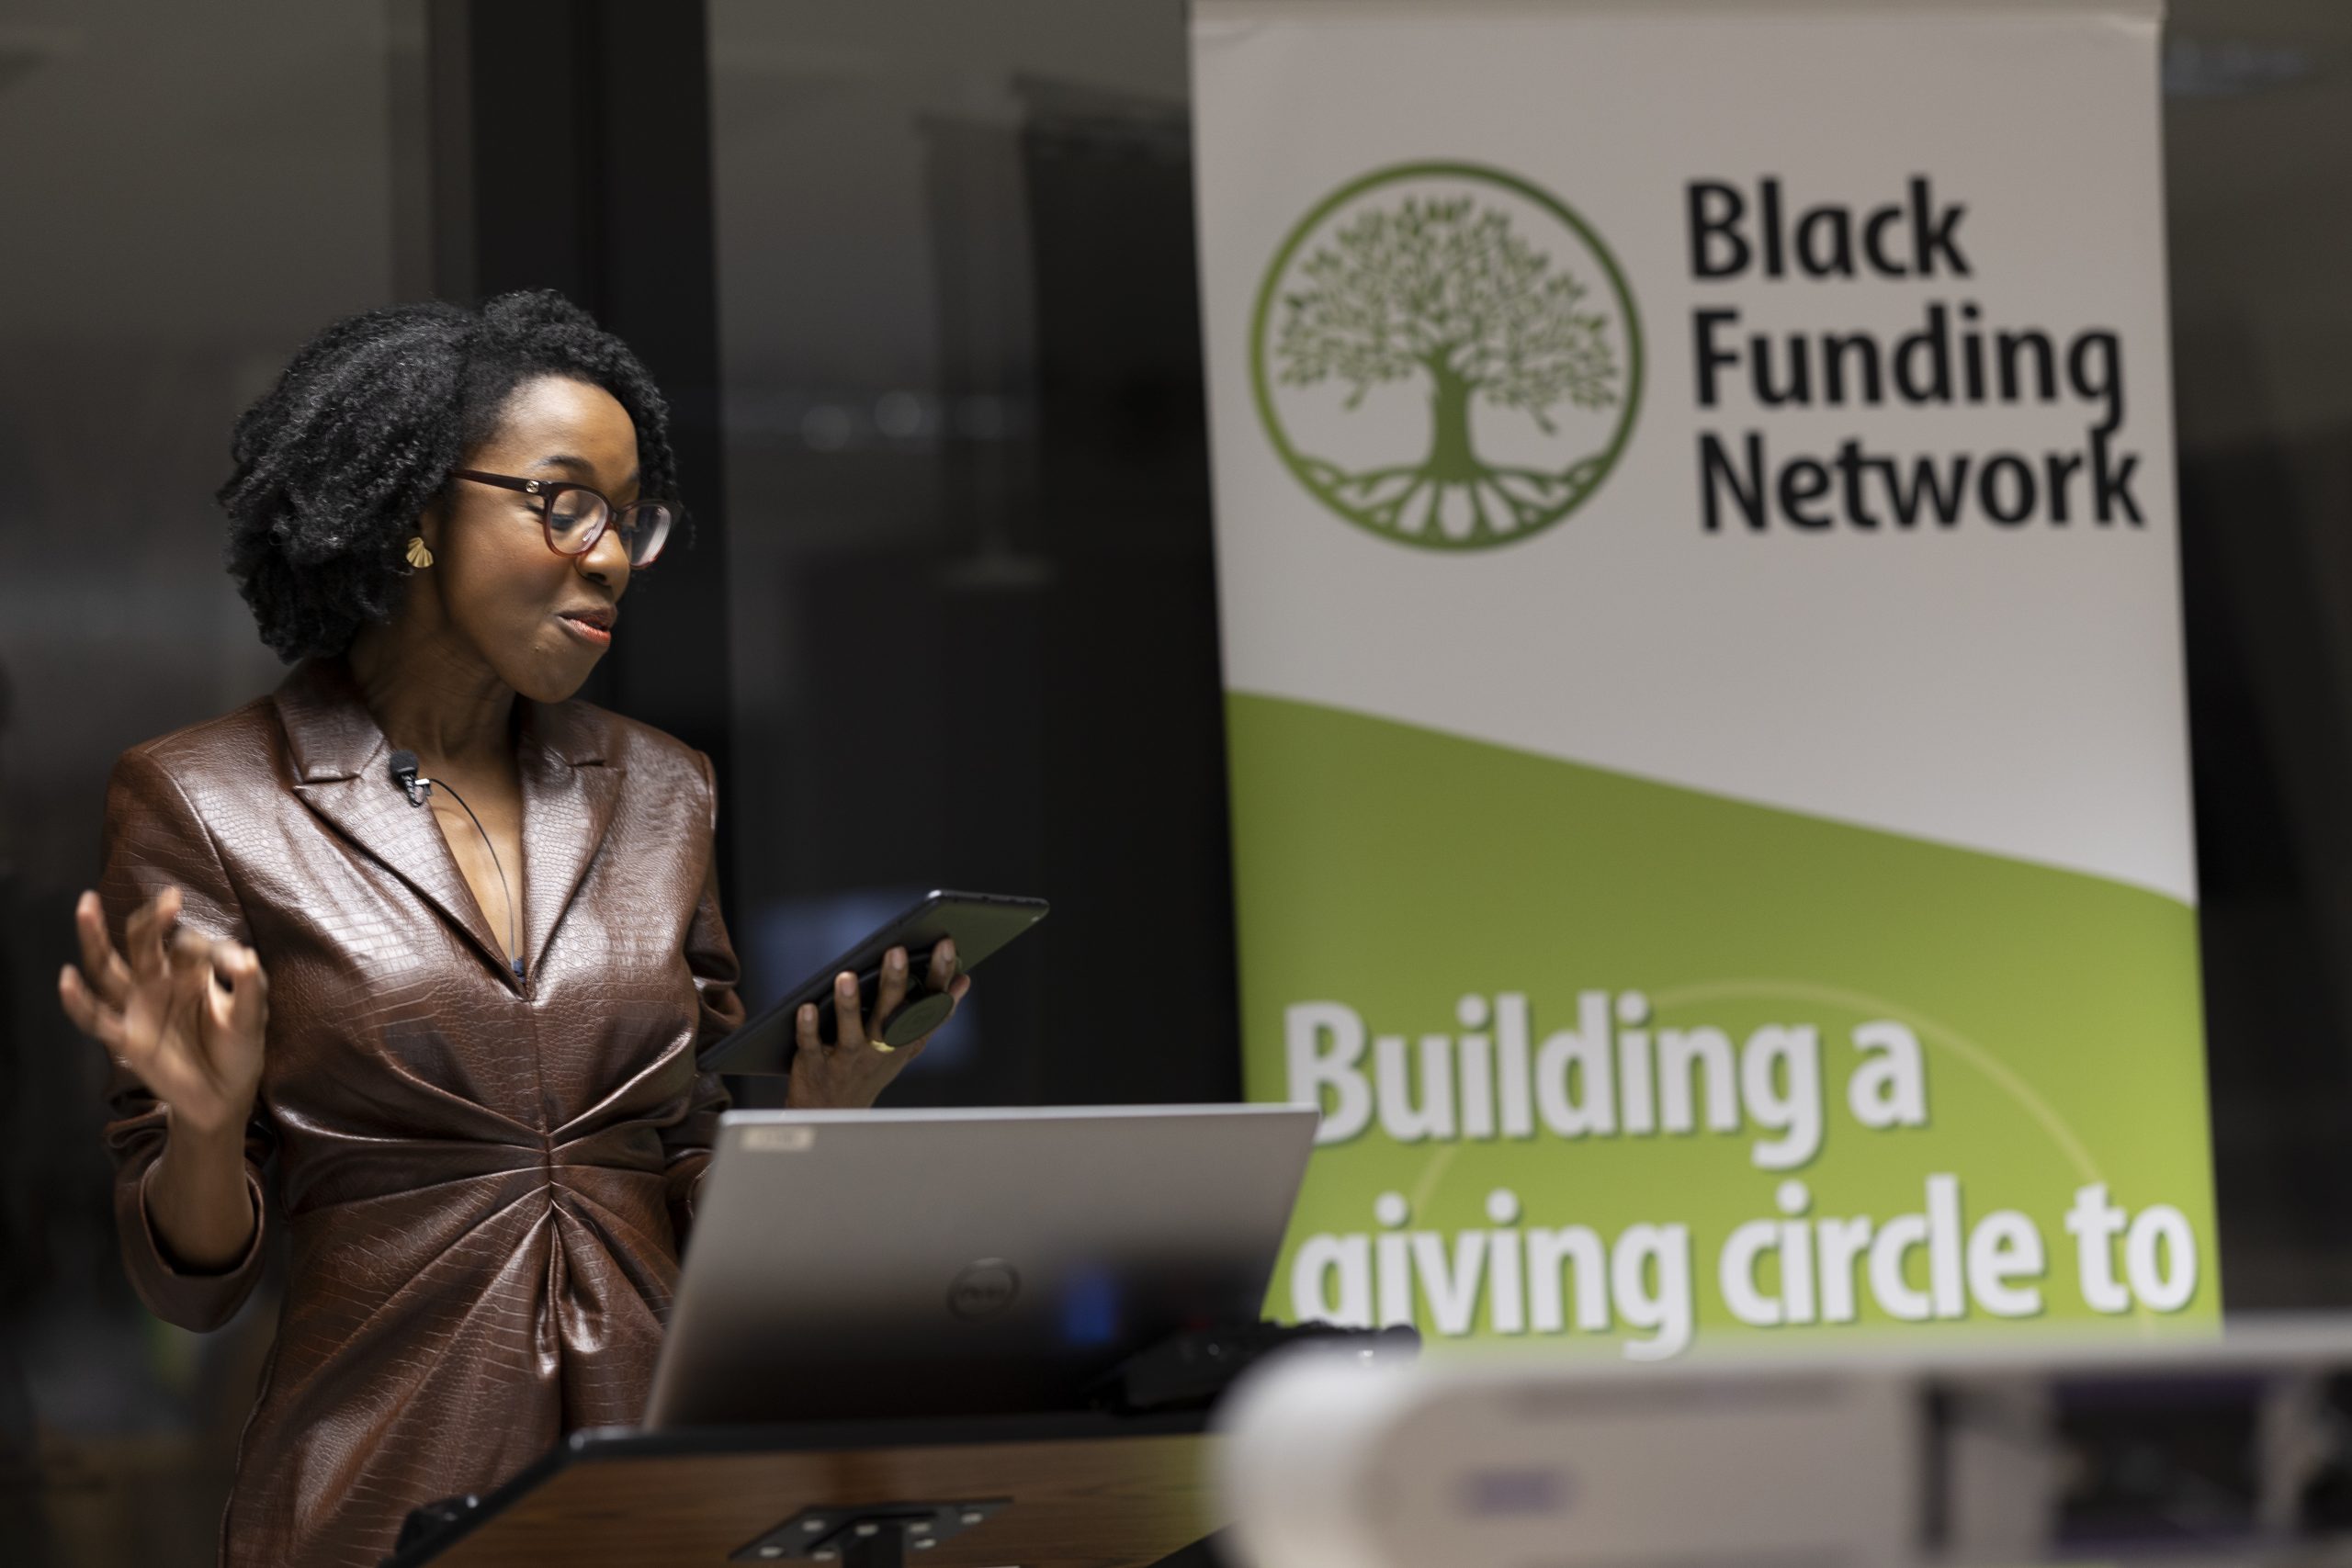 Funding for organisations in the UK - Black Funding Network